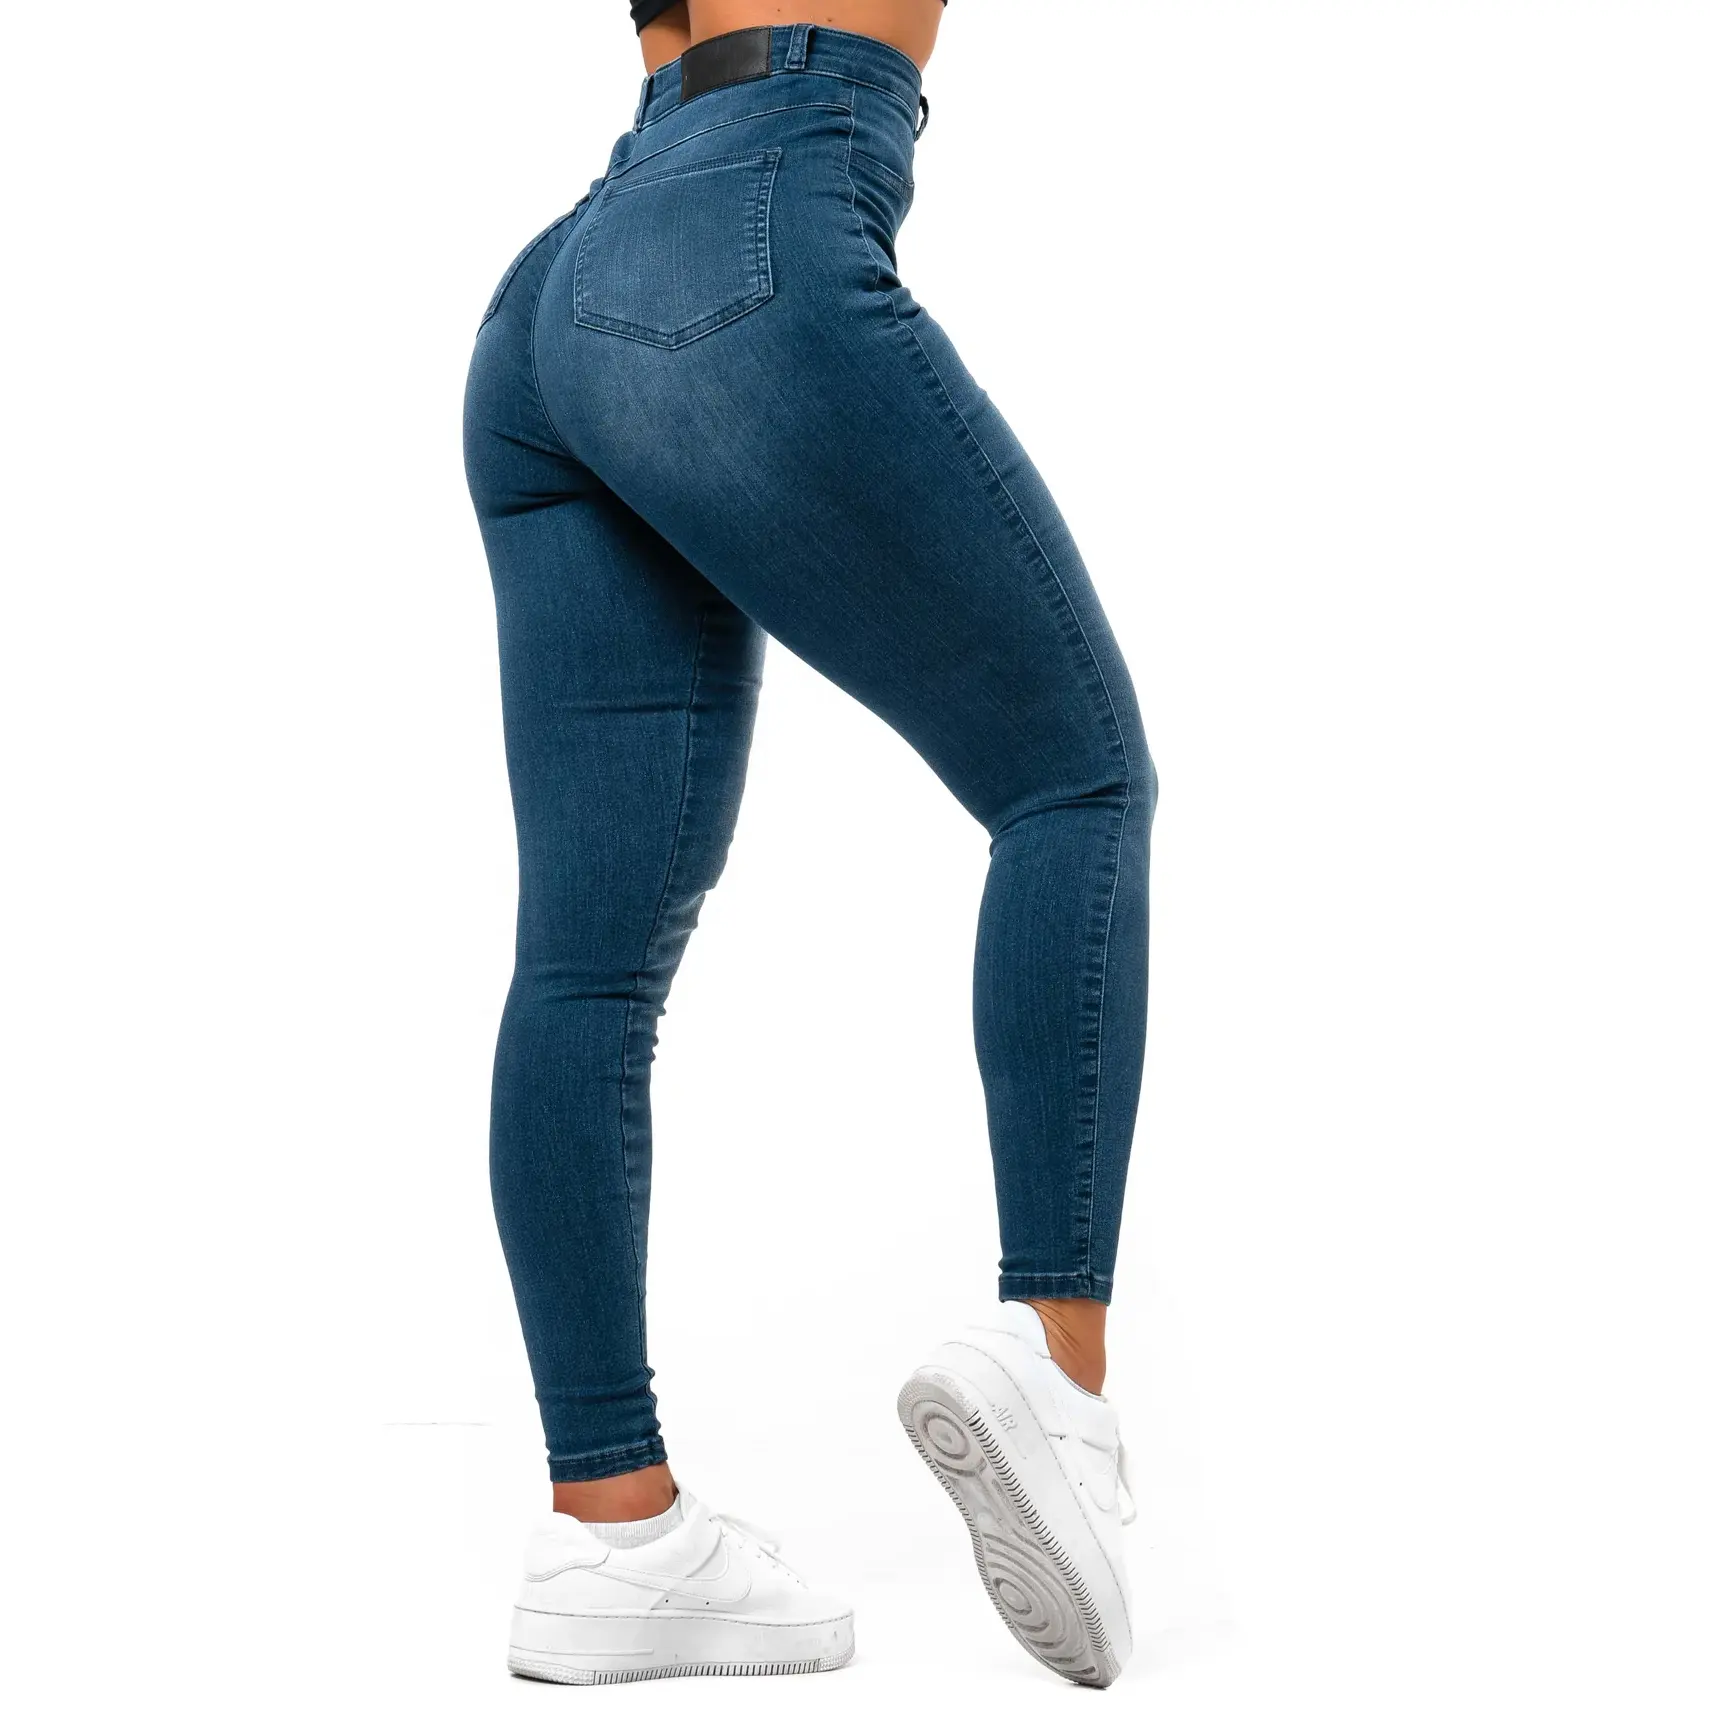 New Trendy Women's High Waist Azure Blue Jeans Stretch Fabric Denim Pants Custom Skinny Zipper Pocket Jeans